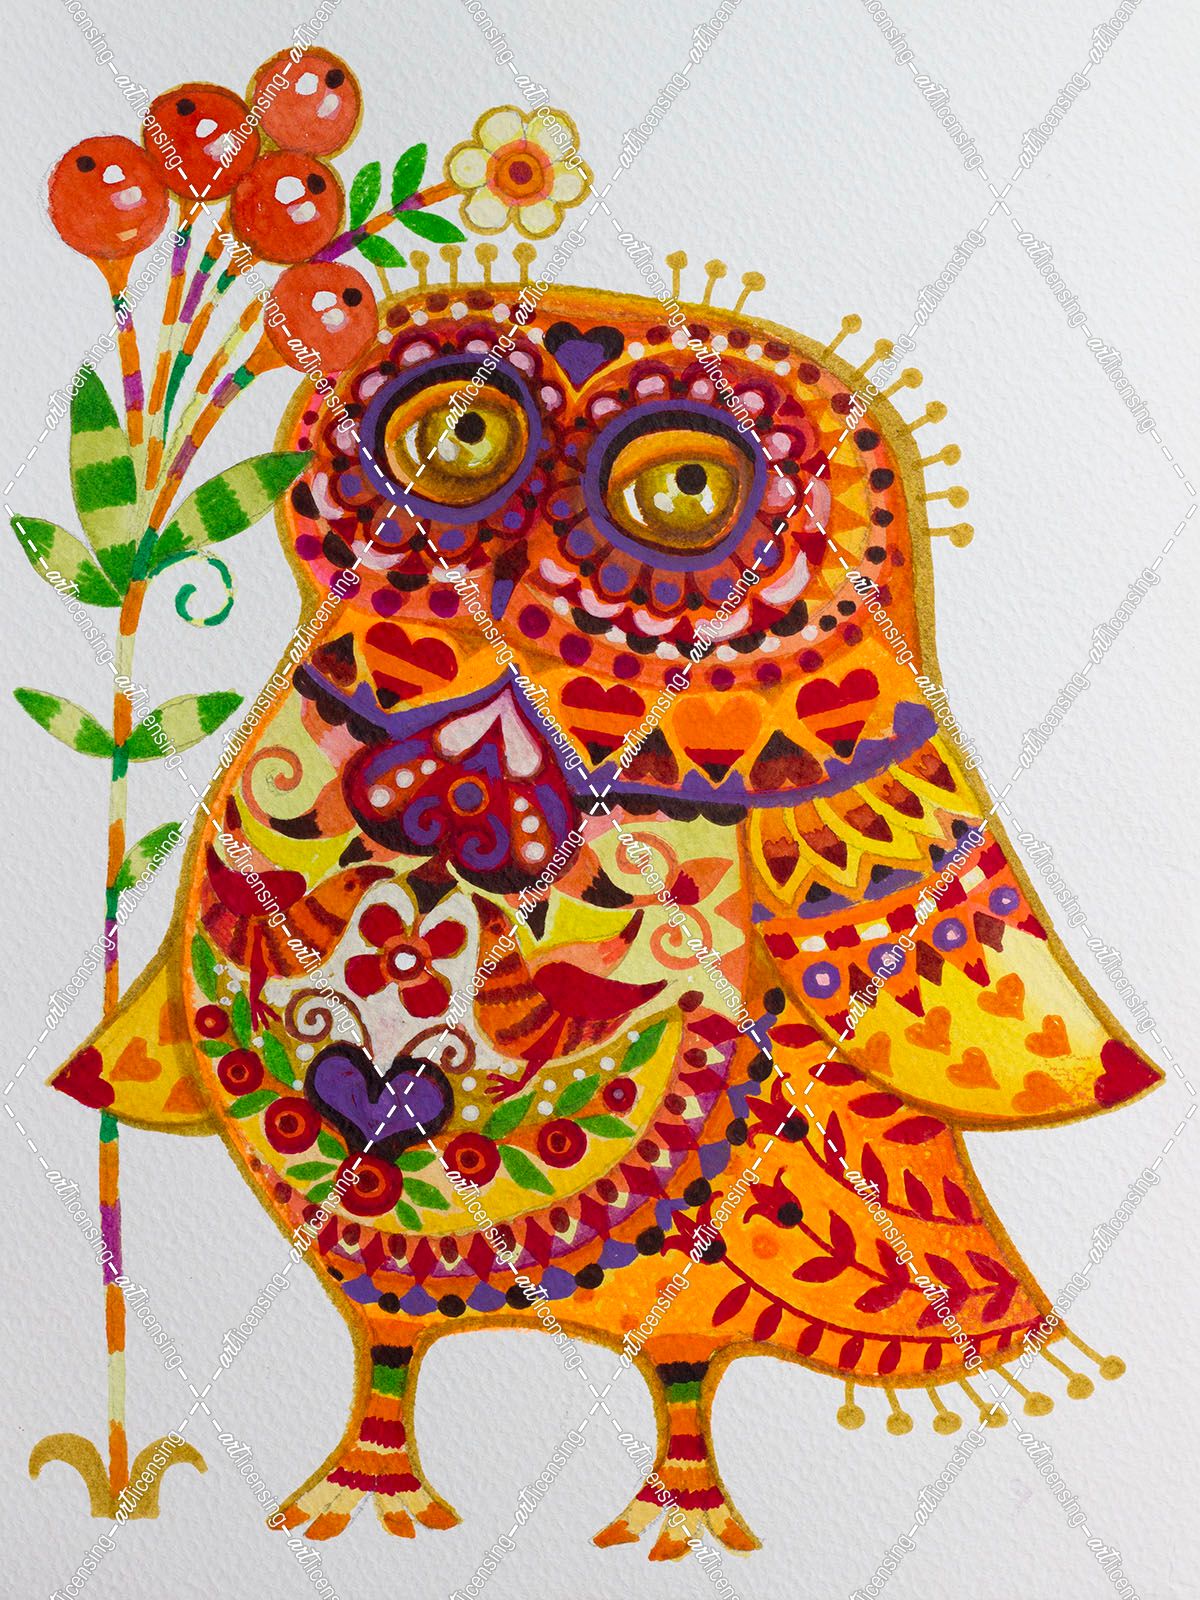 Decorated Owl